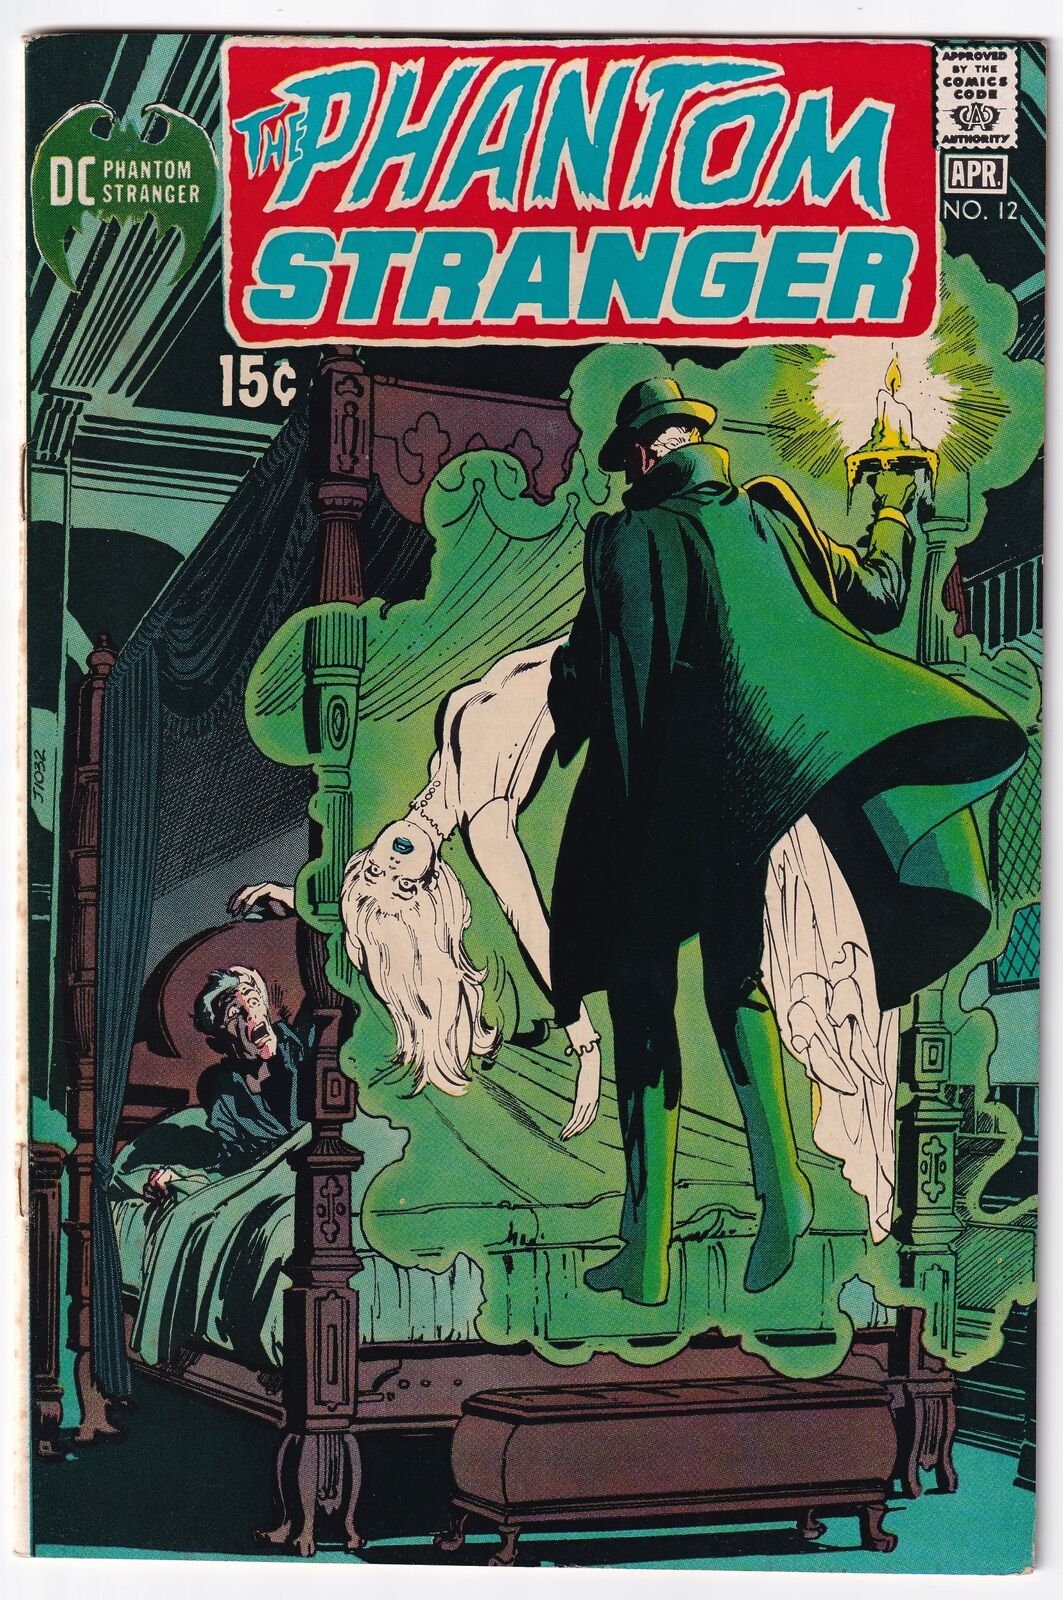 The Phantom Stranger #12 (DC, 1971) Neal Adams Cover High Quality Scans.